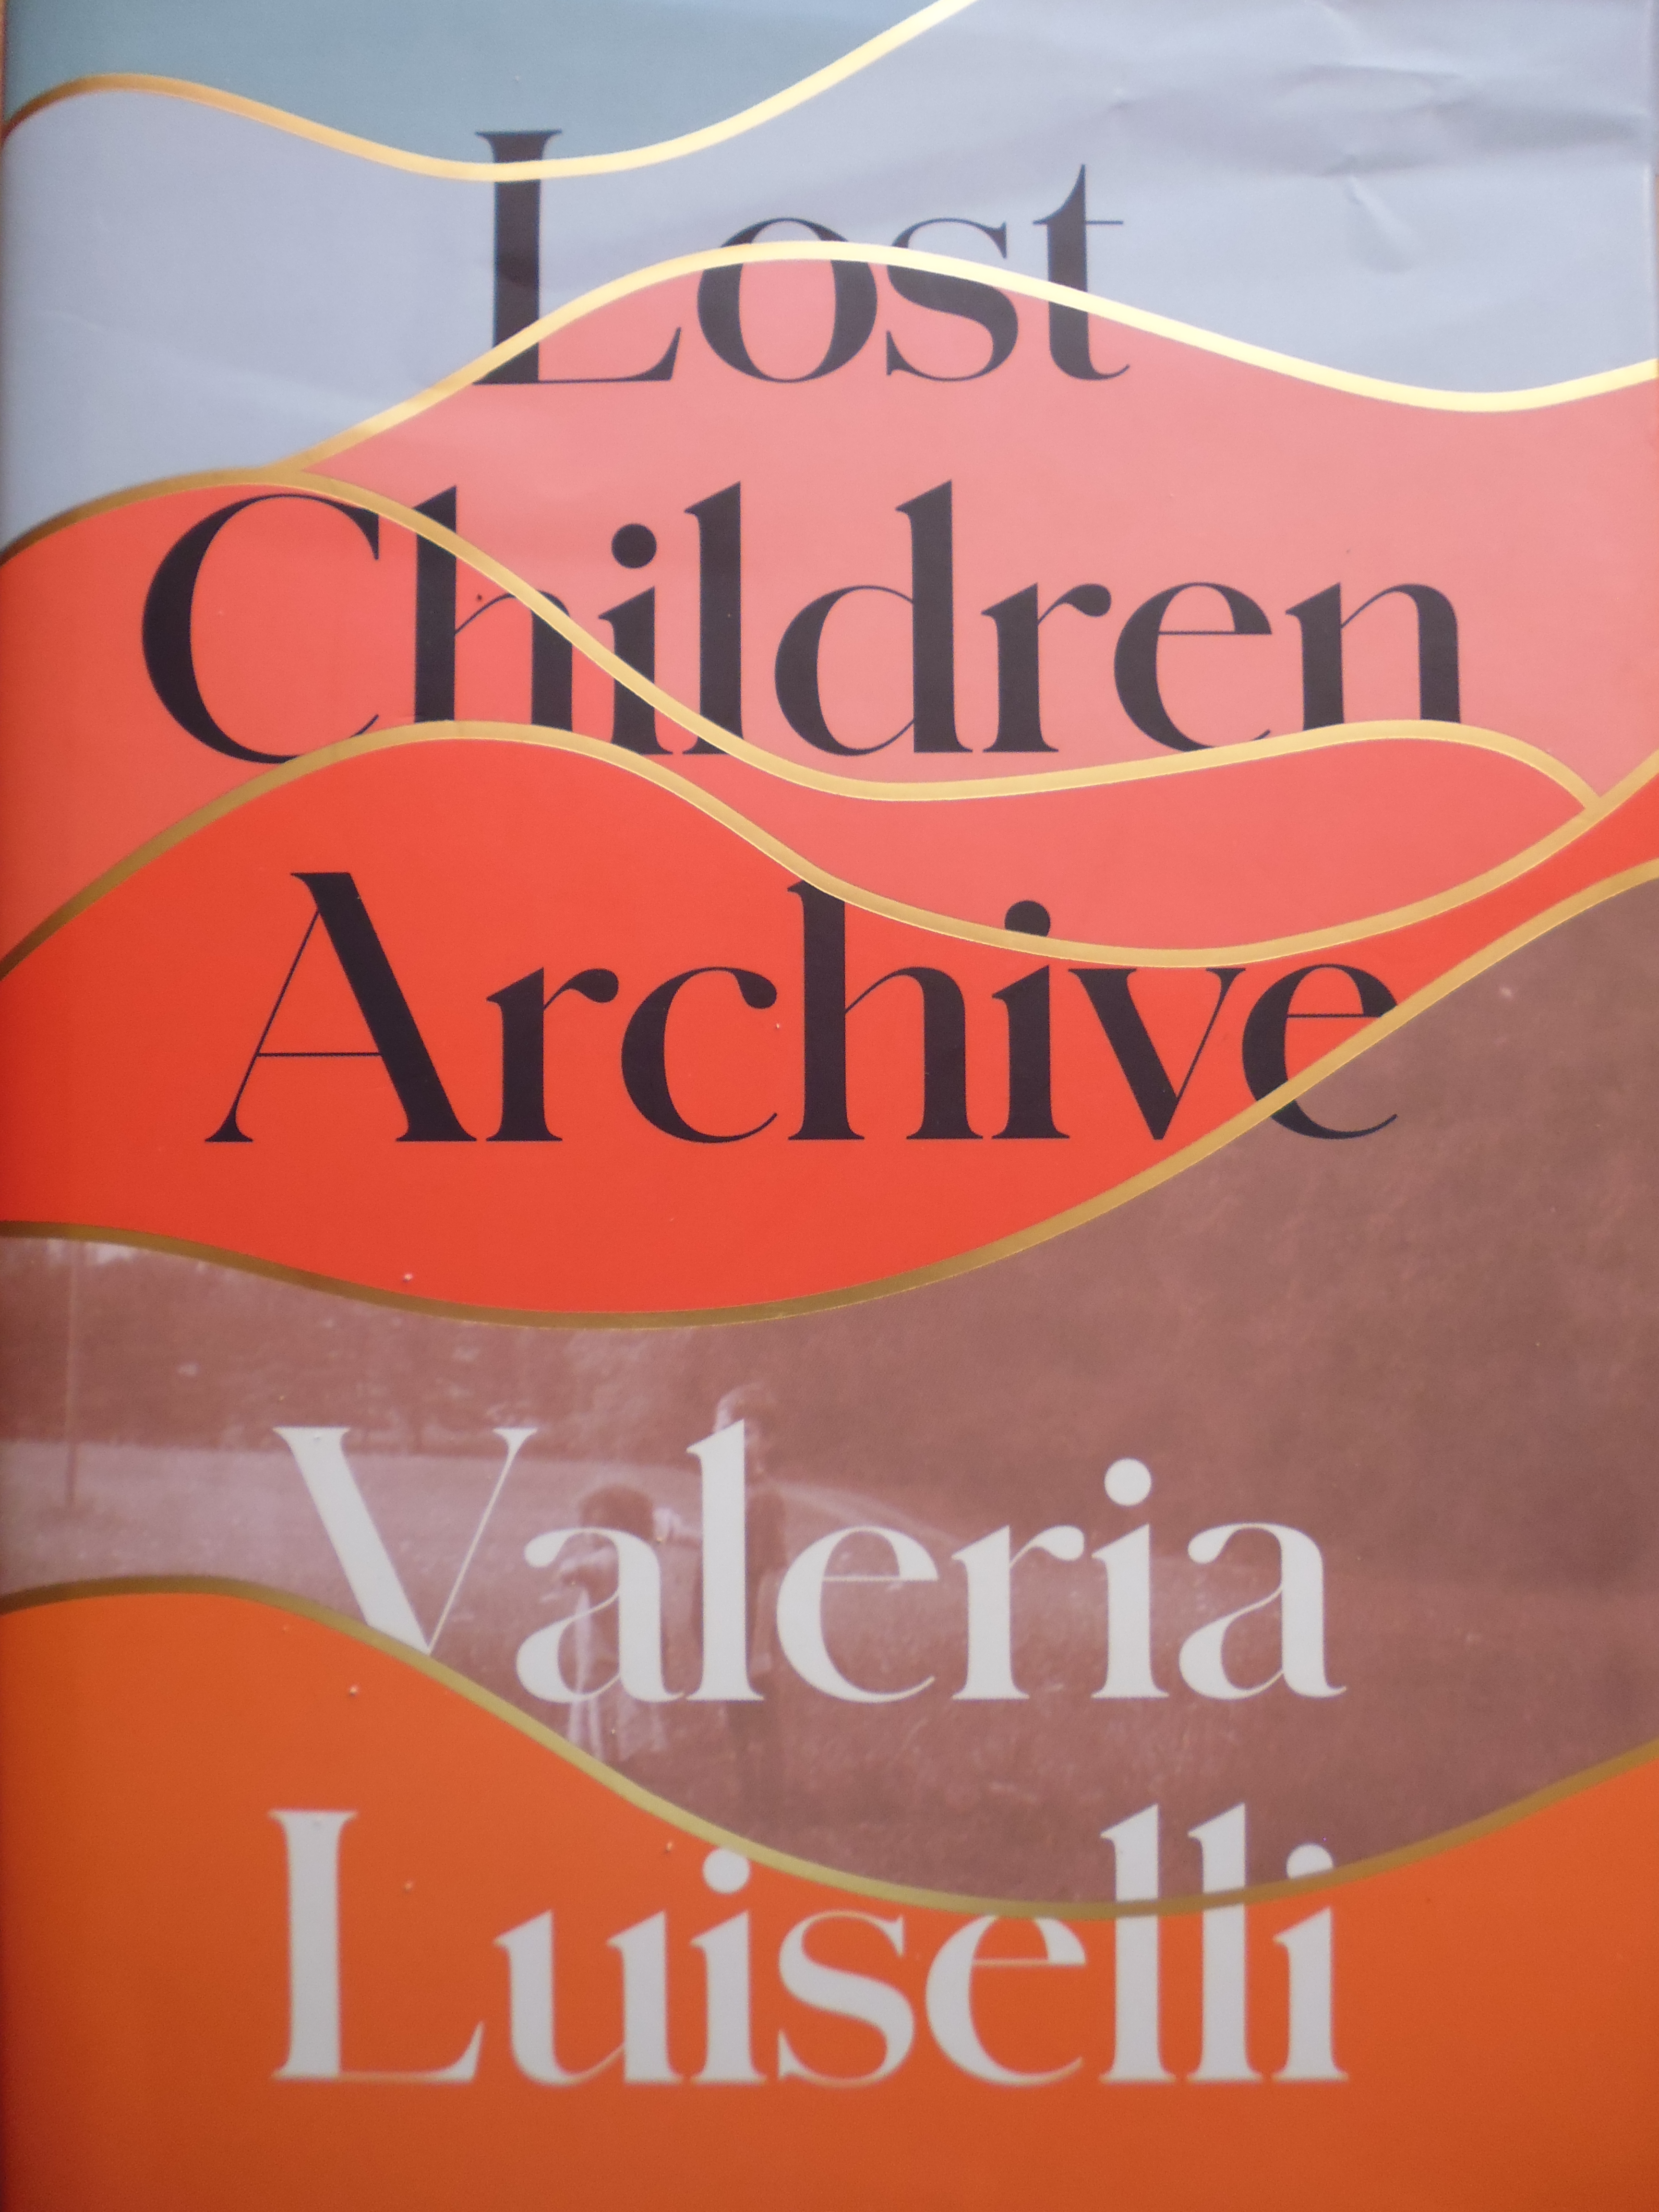 Lost Children Archive By Valeria Luiselli Peakreads A novel by valeria luiselli. lost children archive by valeria luiselli peakreads